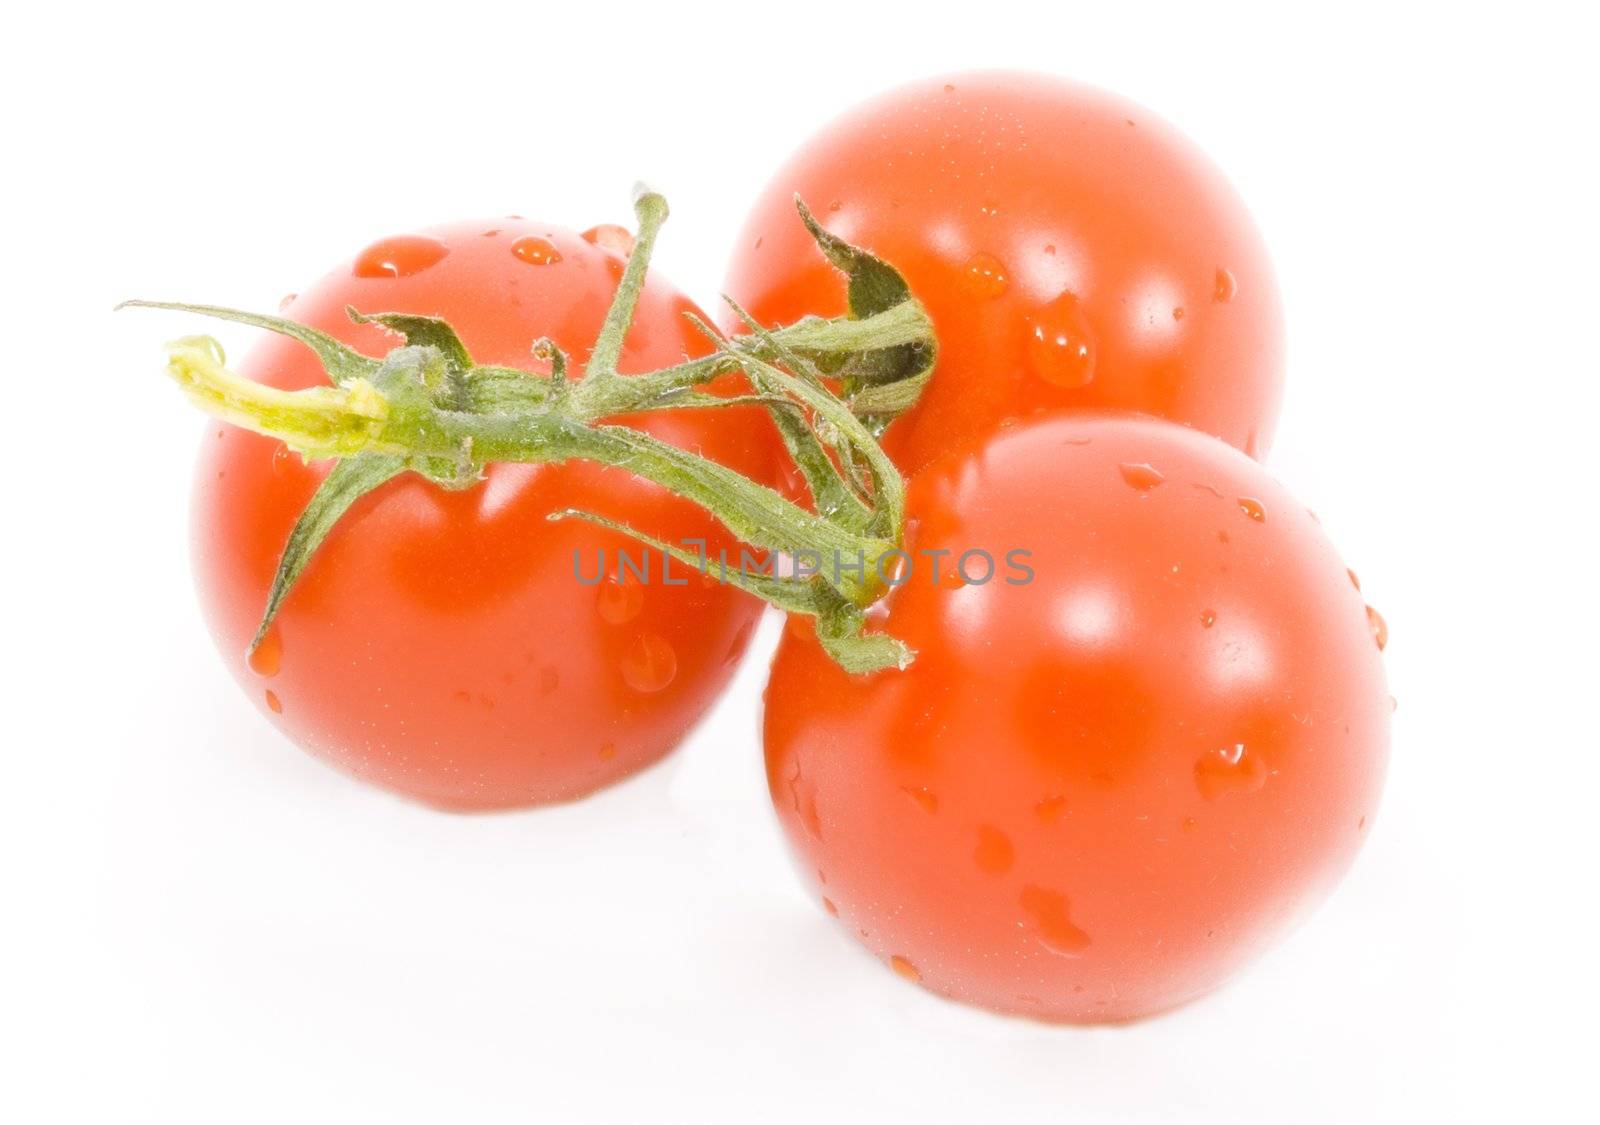 Tomatos by werg